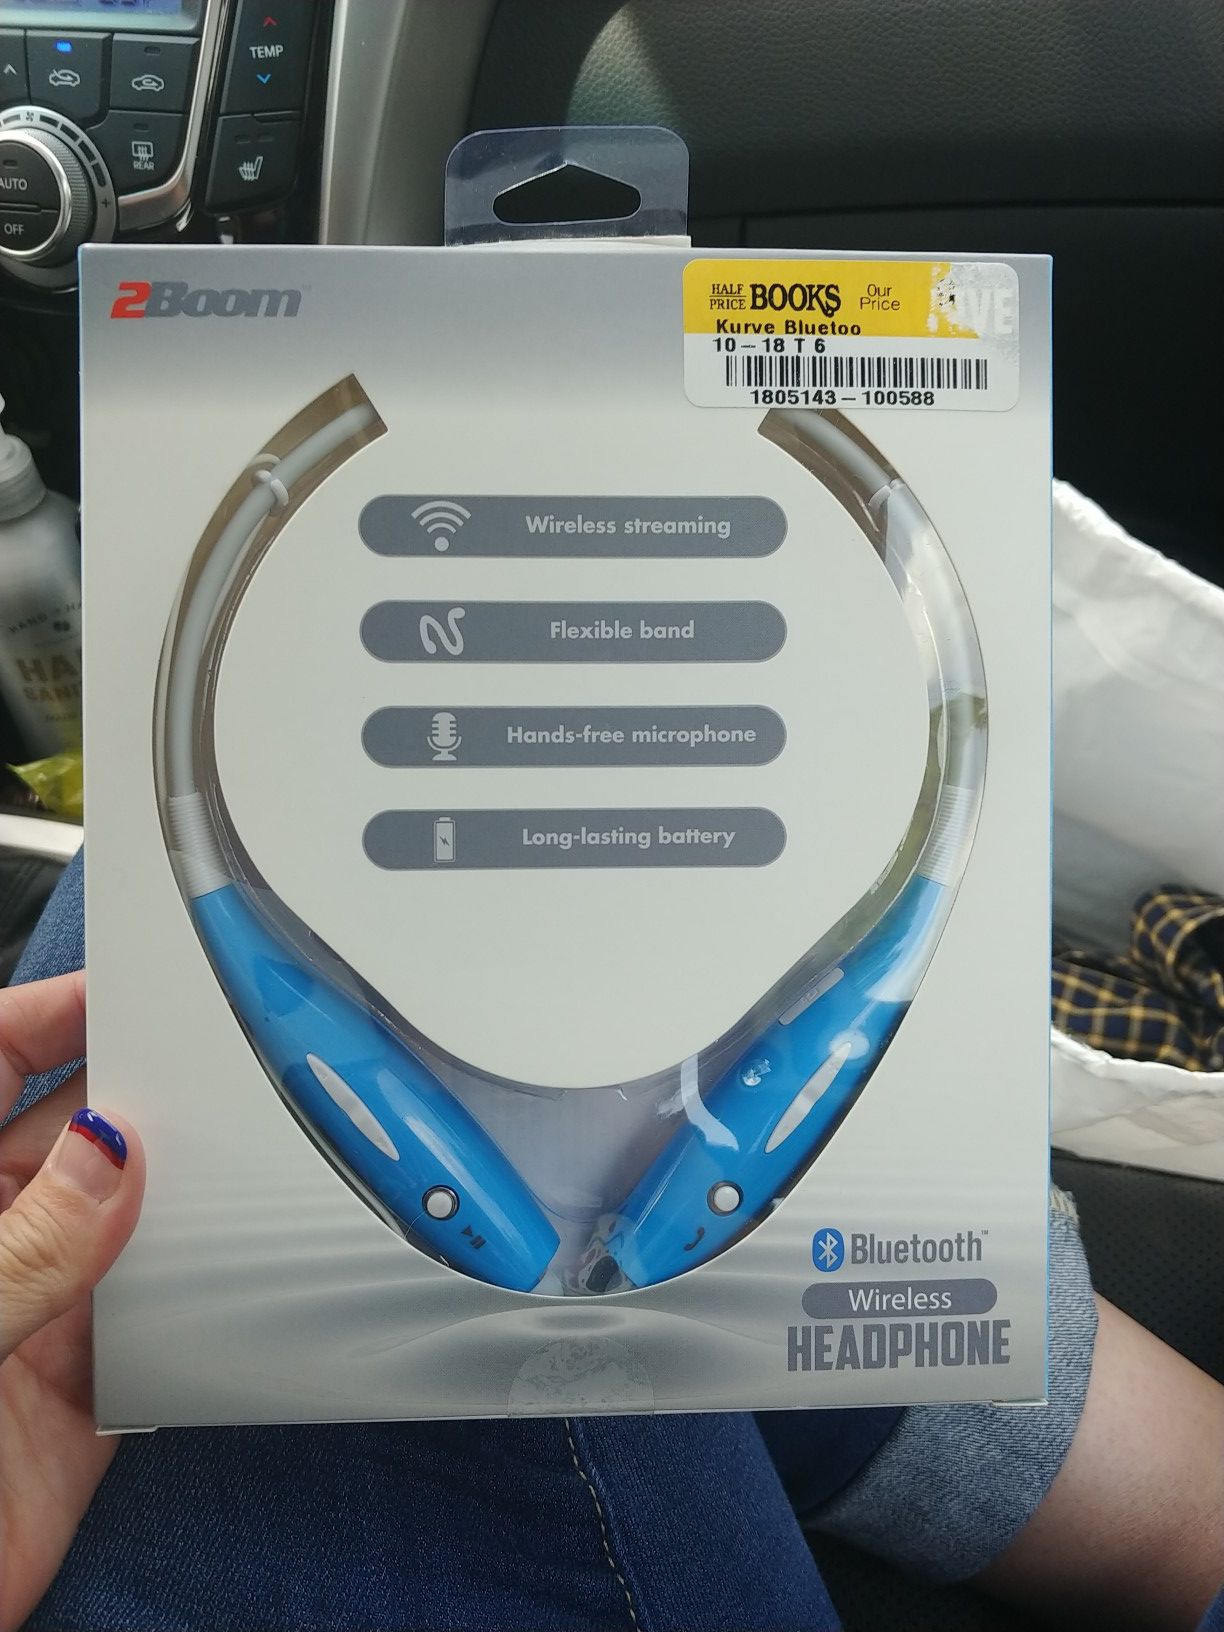 2Boom Bluetooth Wireless Headphones